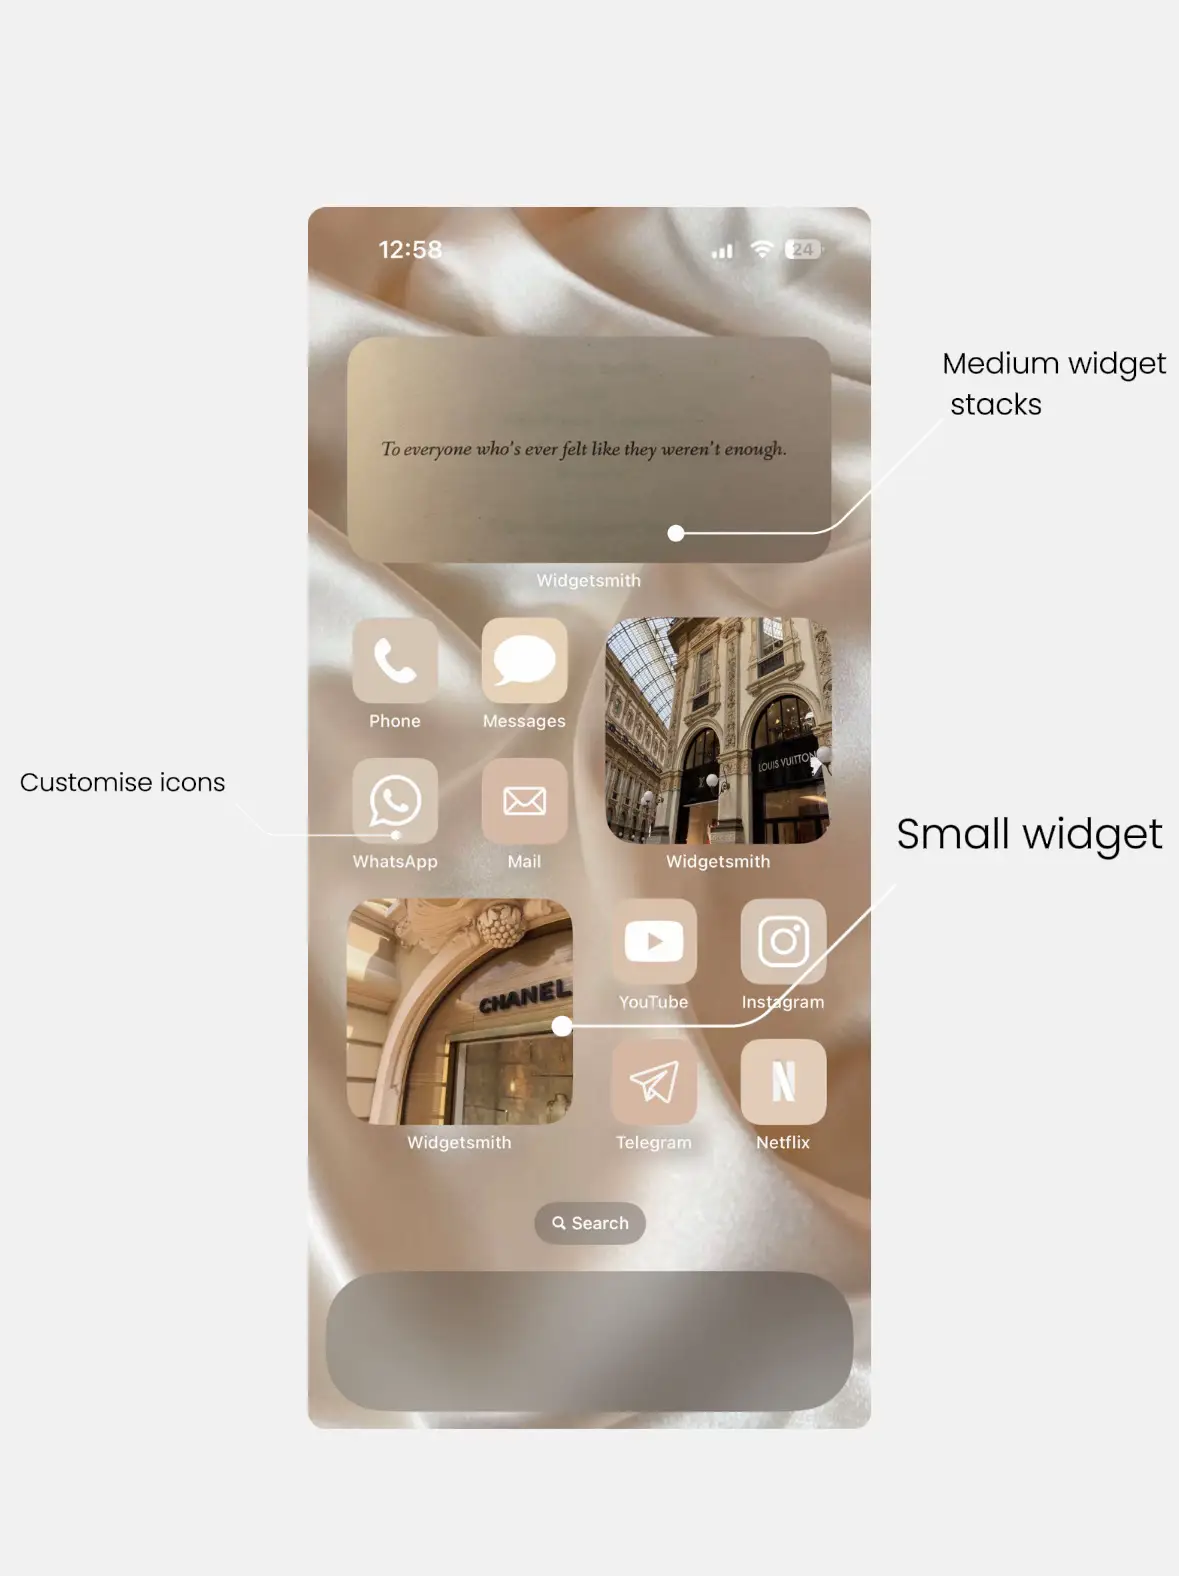 Louis Vuitton pink white icon iOS14 homescreen lock screen inspiration  ideas designer